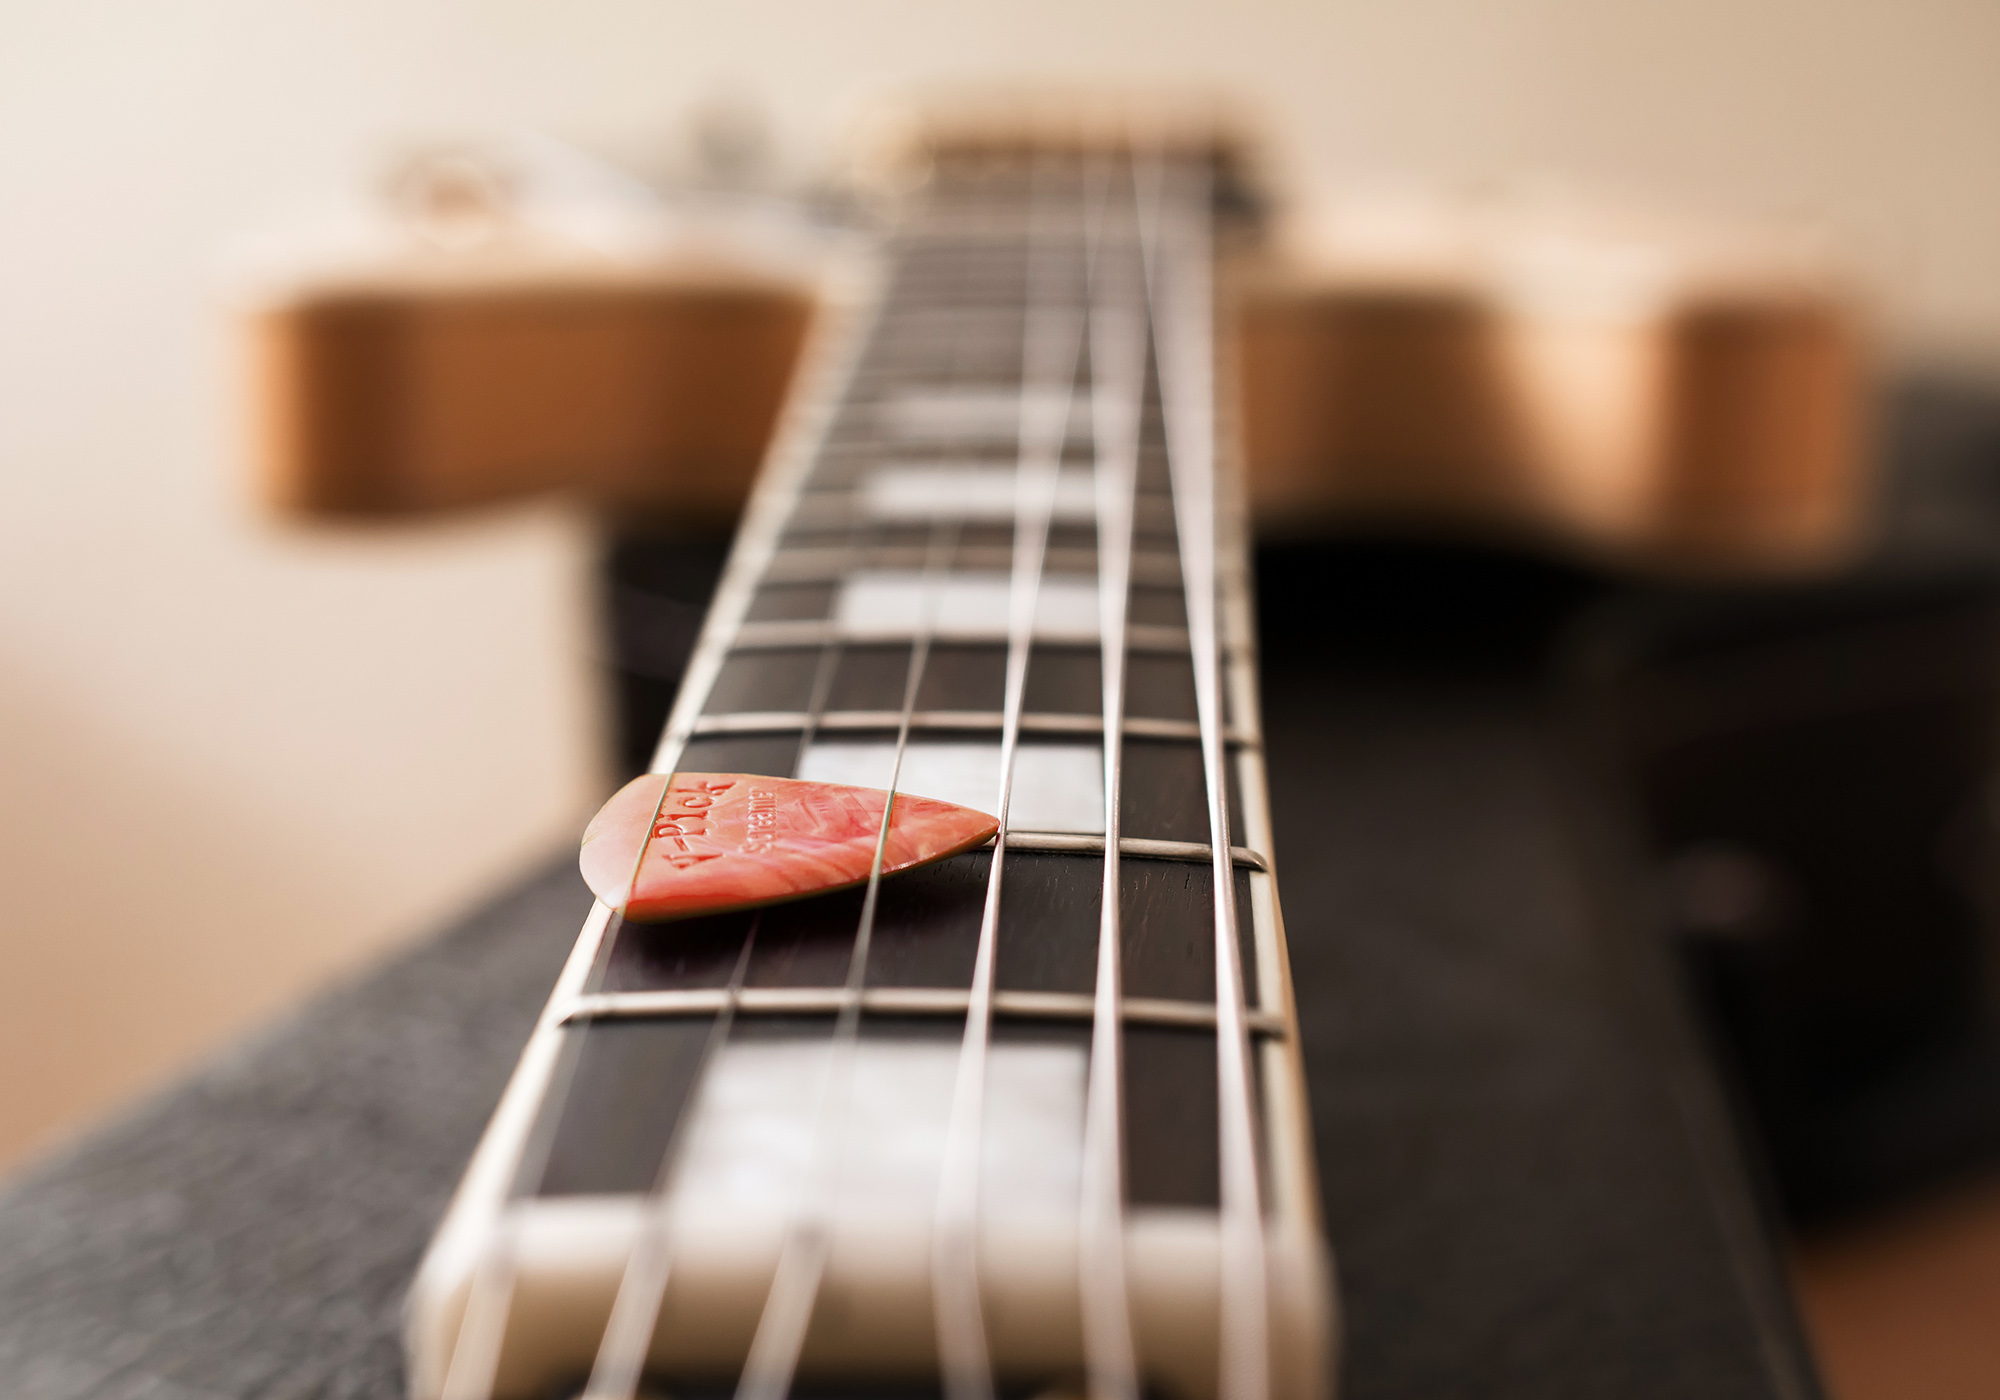 Fender Strat guitar